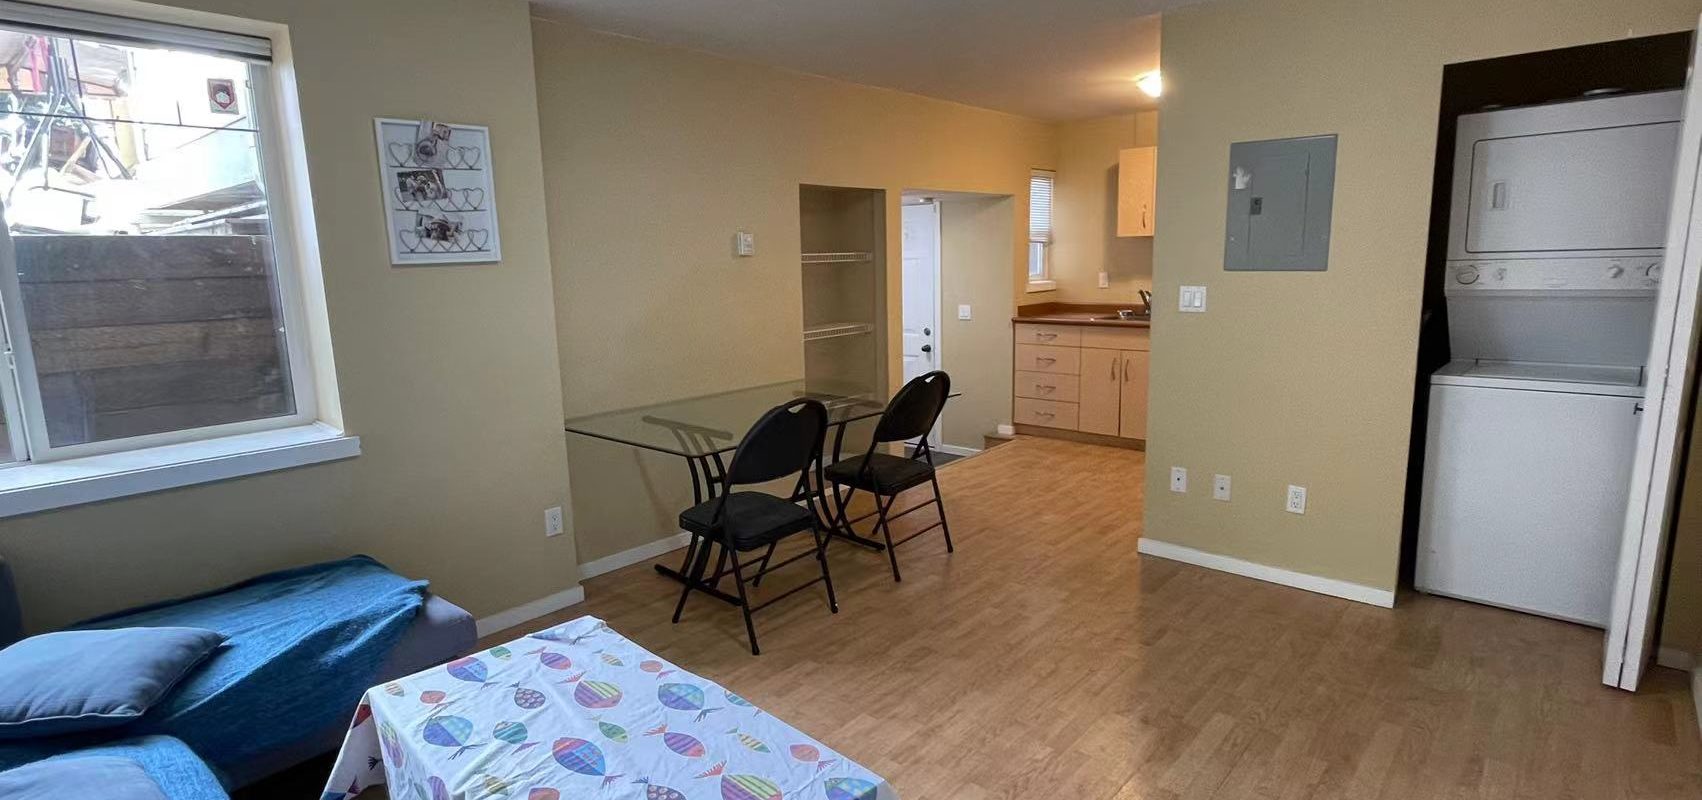 【North Vancouver】$1600 Furnished 2br1ba Basement for Rent